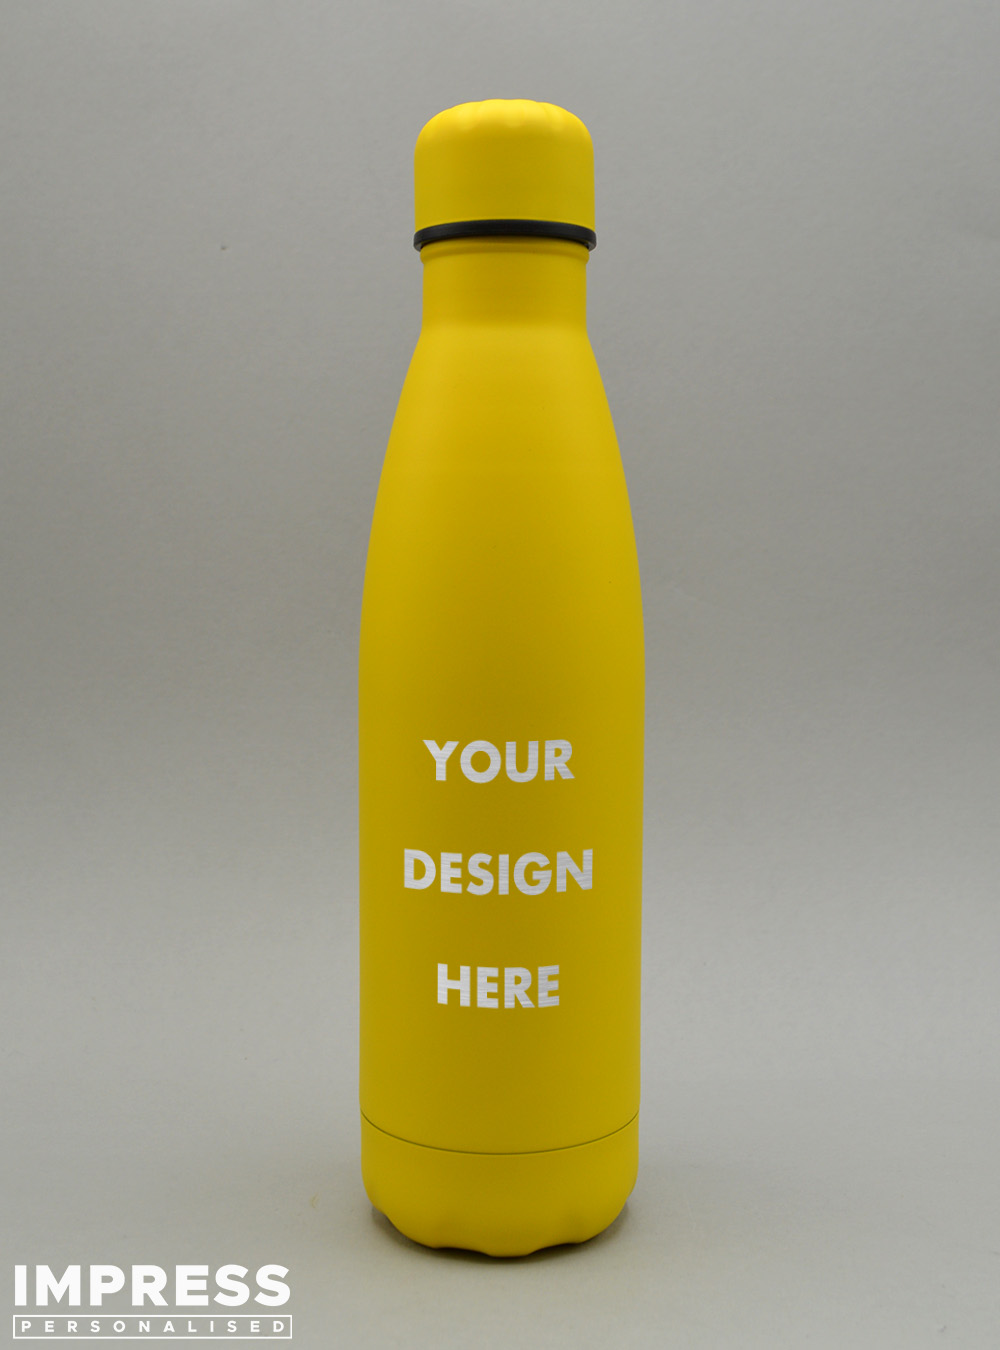 https://impresspersonalised.com/wp-content/uploads/2021/05/thermos-bottle-design-your-own-3.jpg